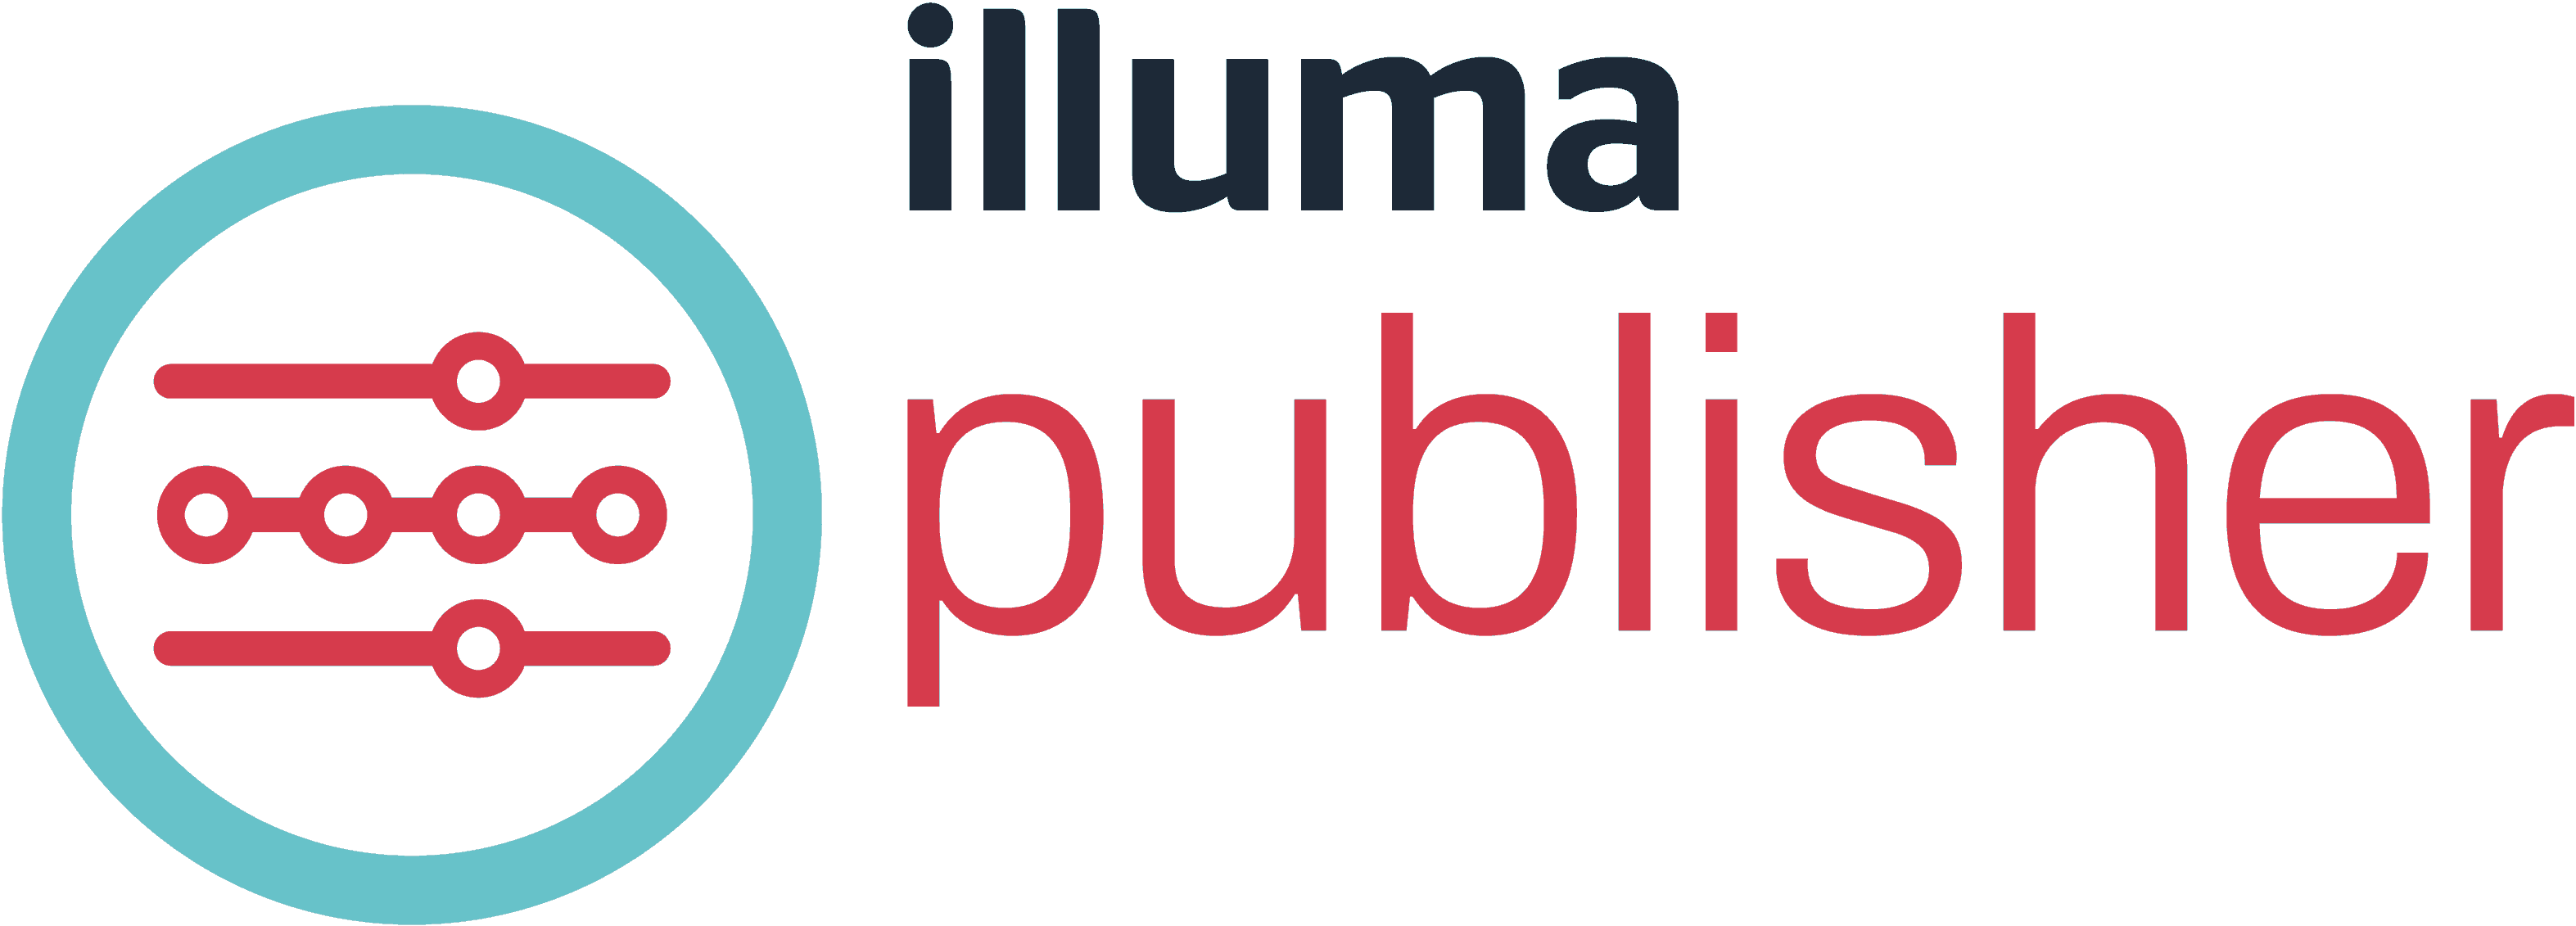 illuma publisher logo